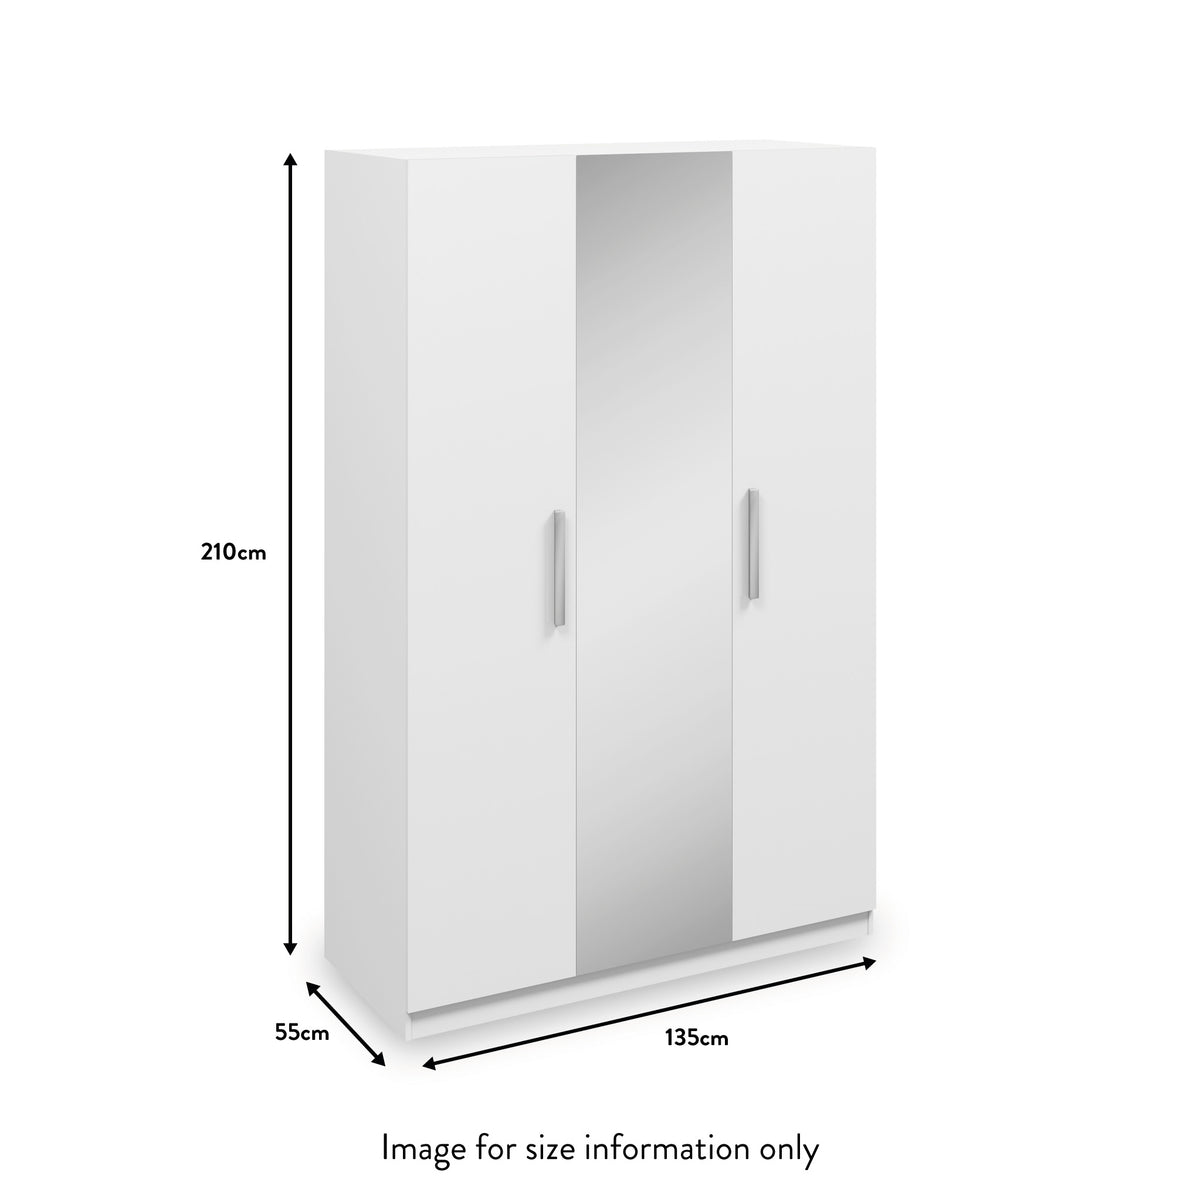 Meribel White 3 Door Mirrored Wardrobe dimensions